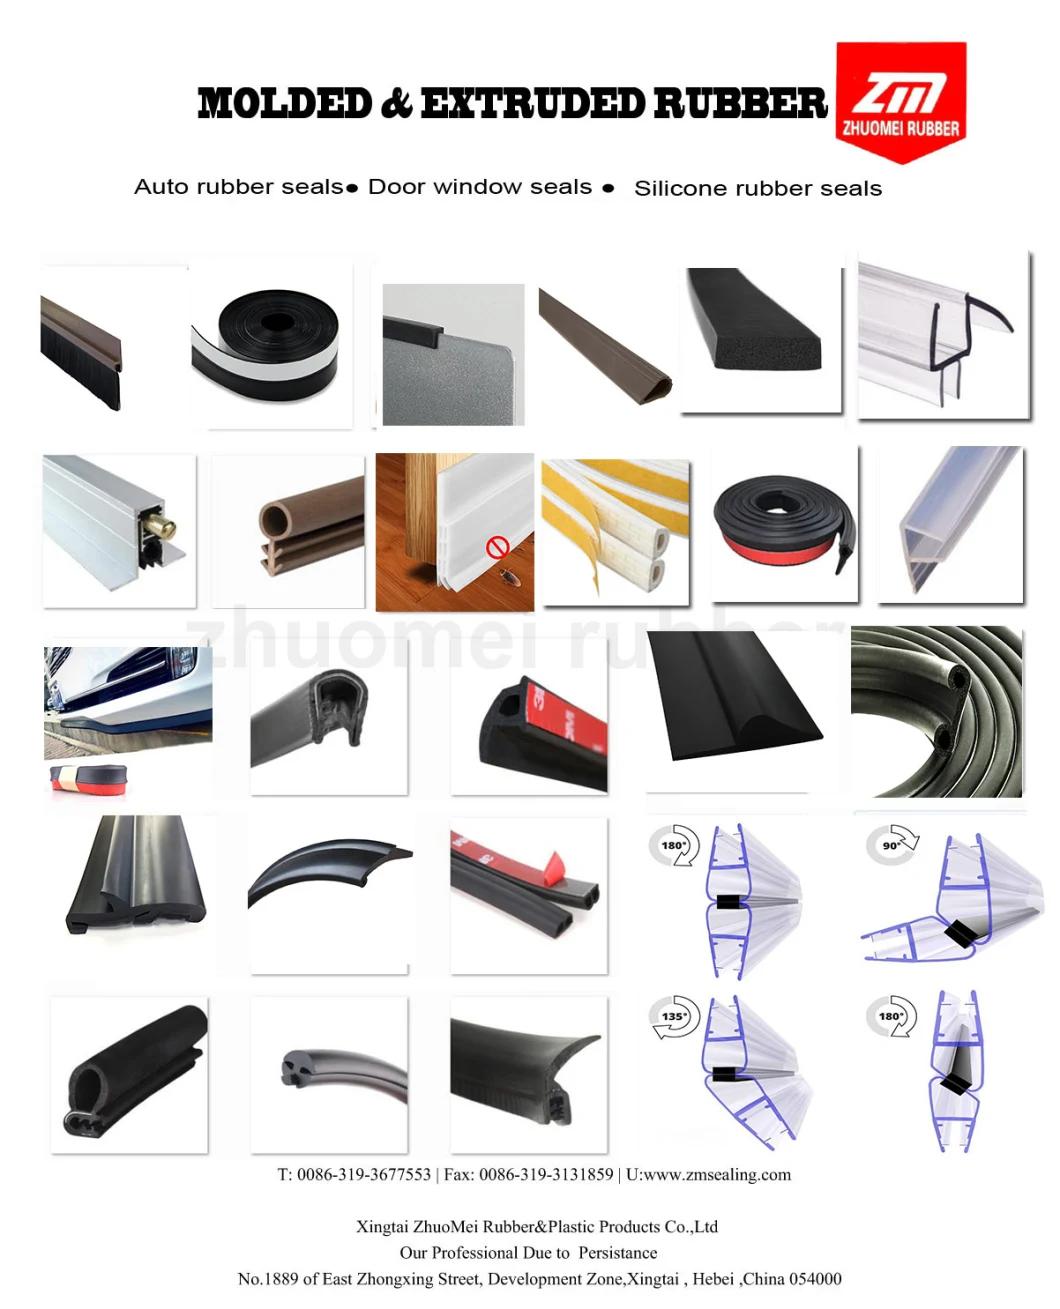 Edge Trim Flexible, PVC Plastic Edge Protector for Sharp and Rough Surfaces